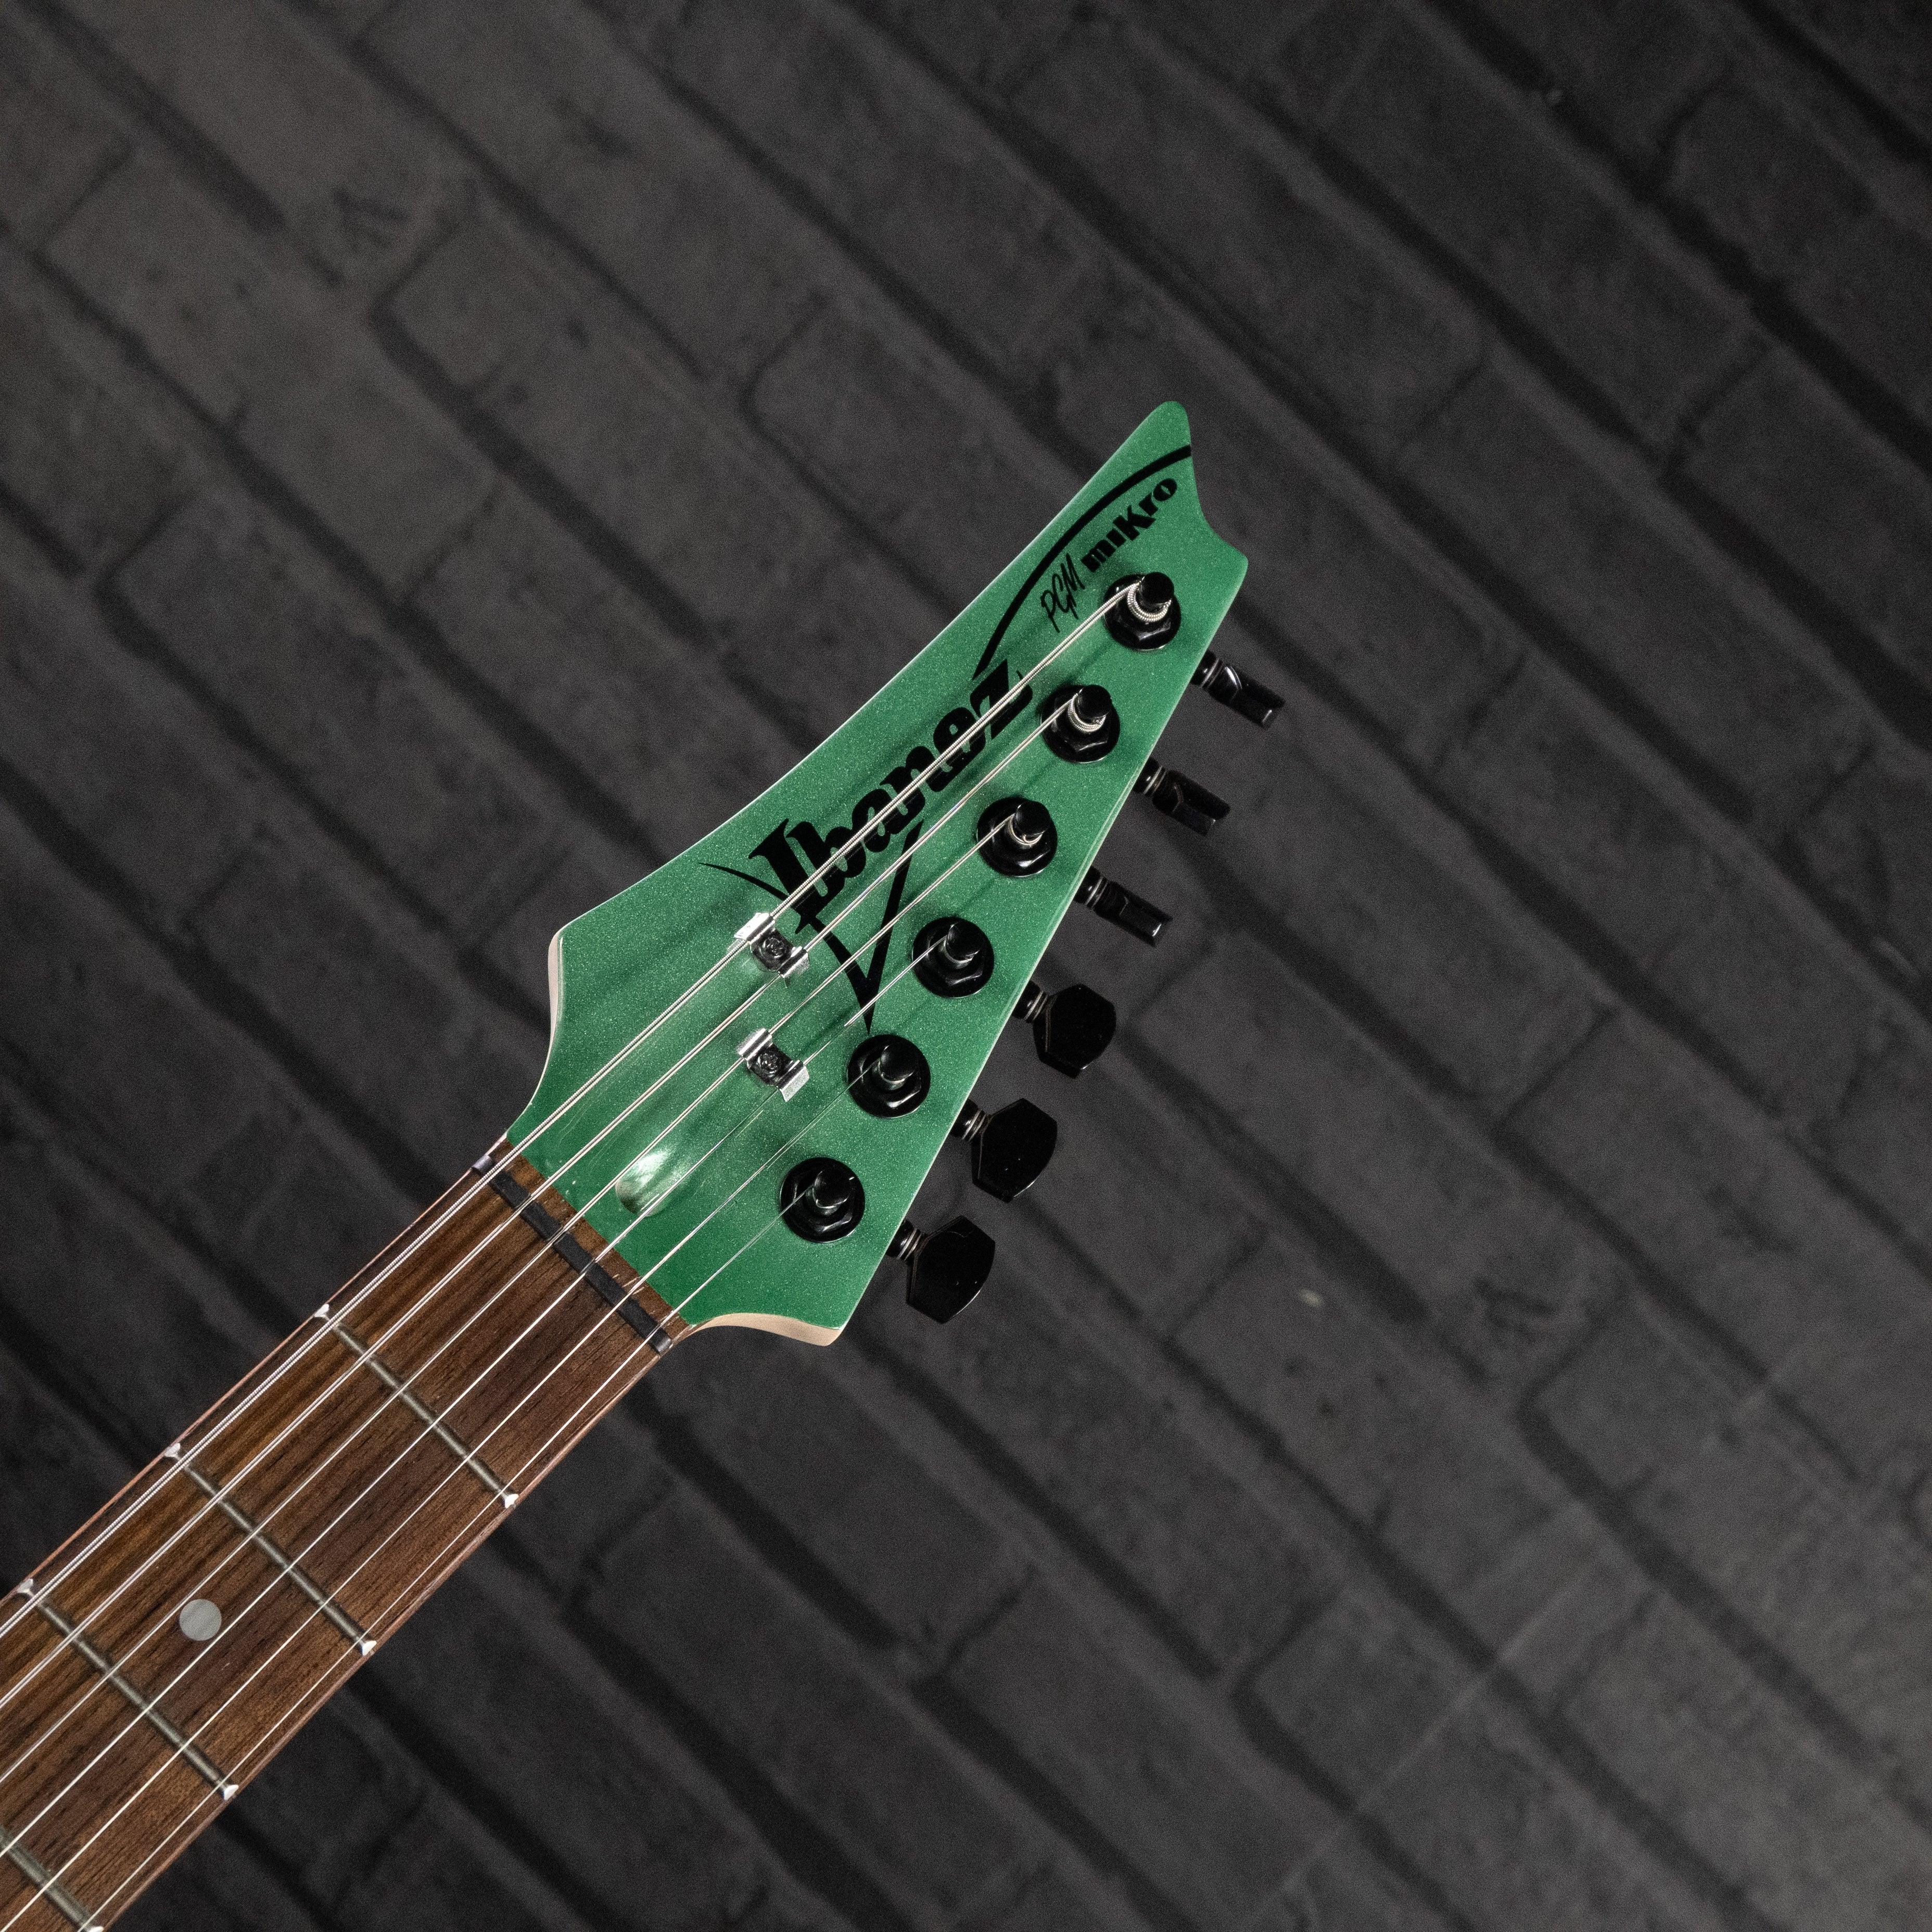 Ibanez Paul Gilbert Signature Mikro PGMM21 Short-Scale Electric Guitar (Metallic Light Green) - Impulse Music Co.